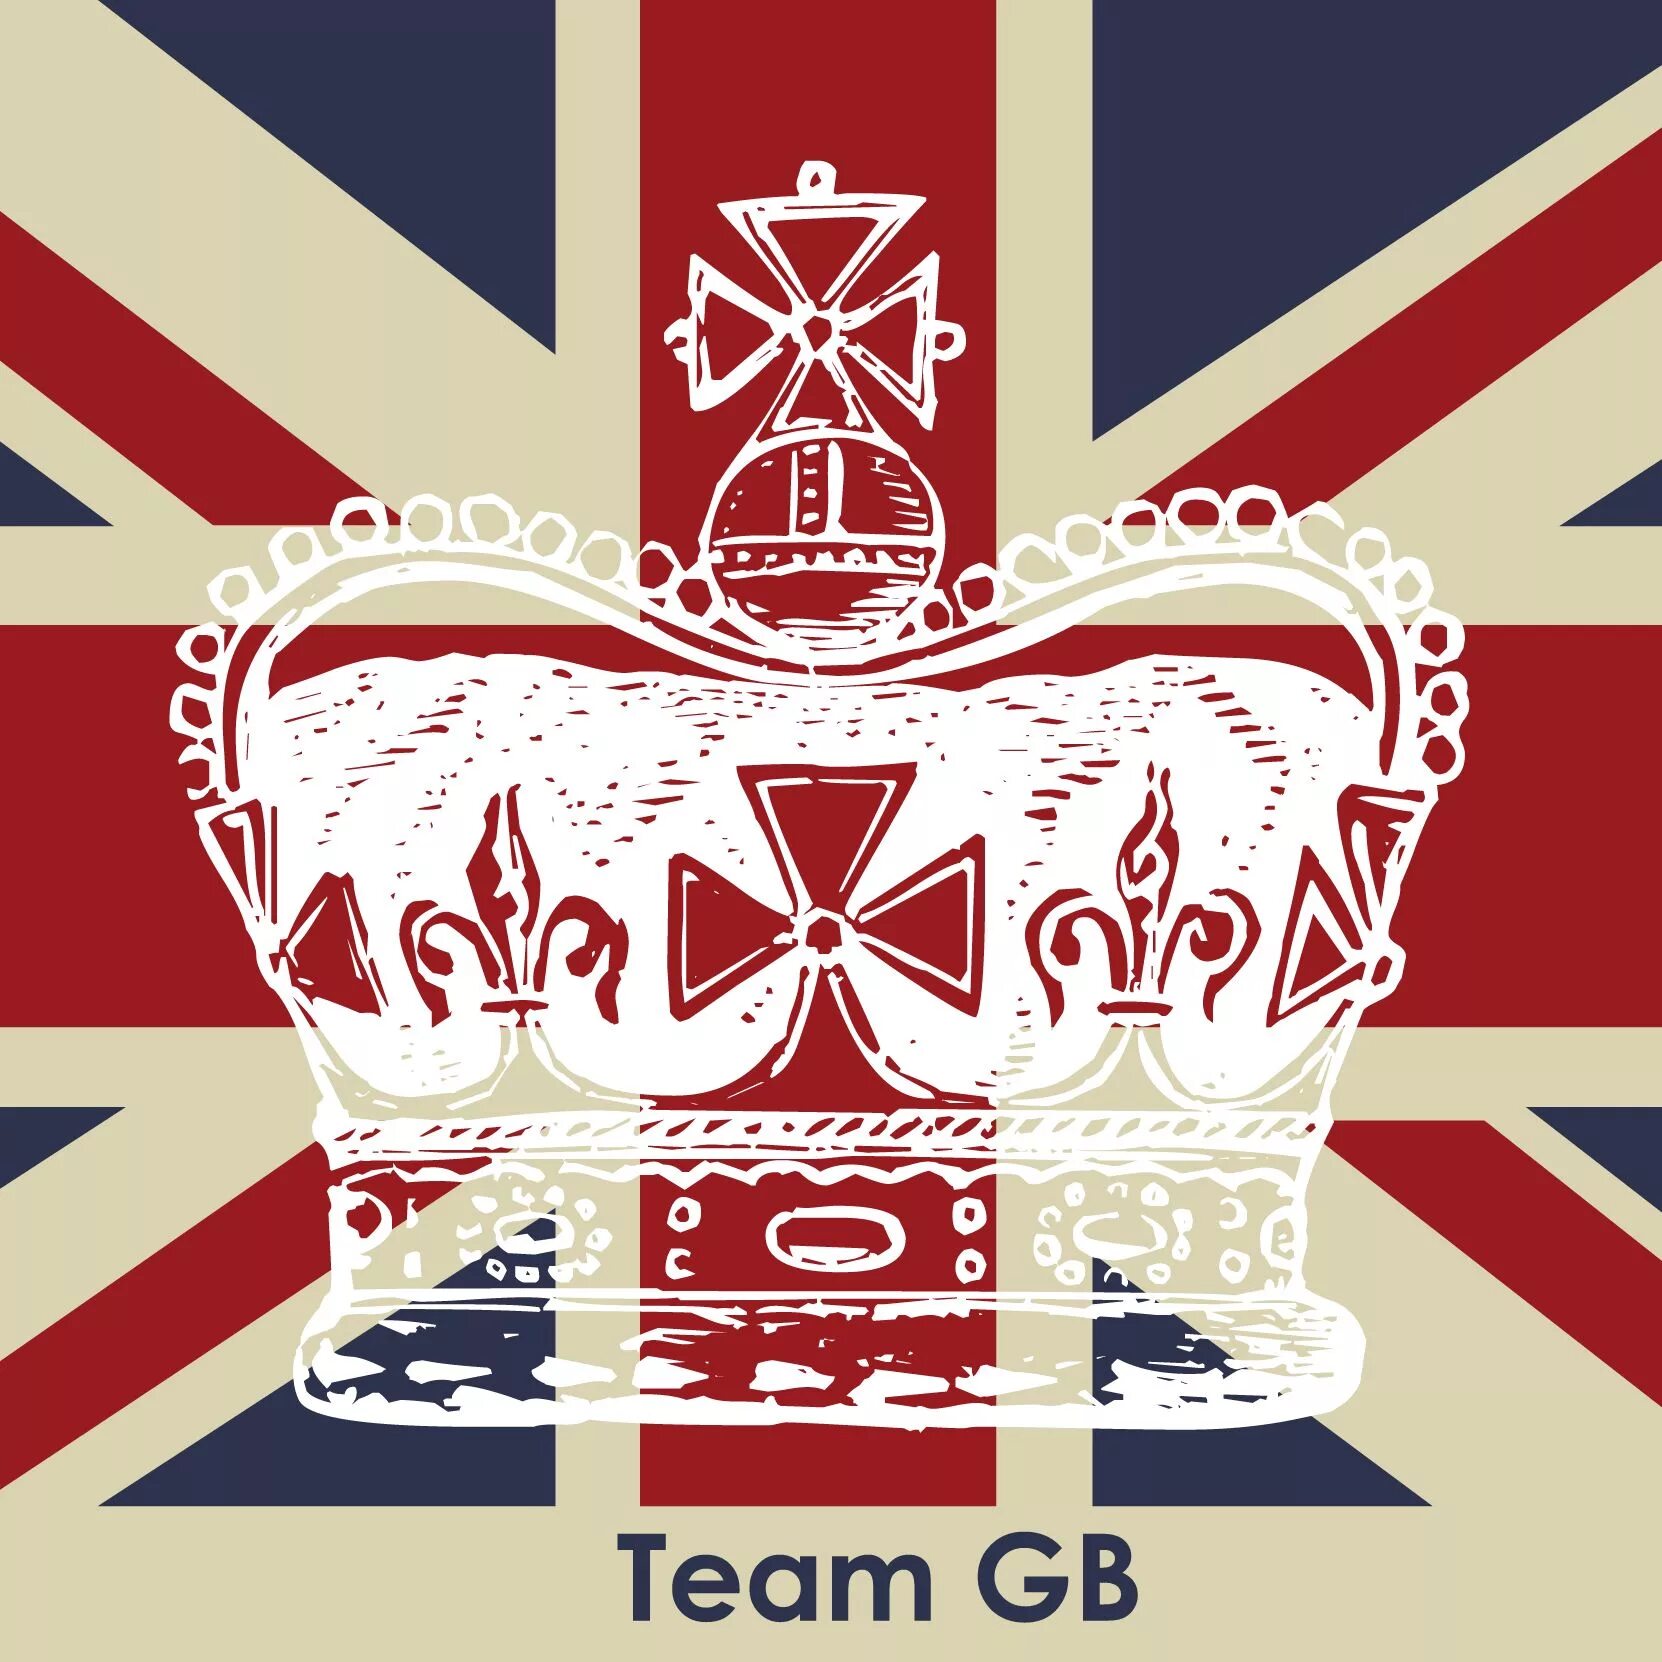 Тег великобритании. Британская корона и флаг. Флаг Британии. Флаг Британии с гербом. Флаг Англии с короной.